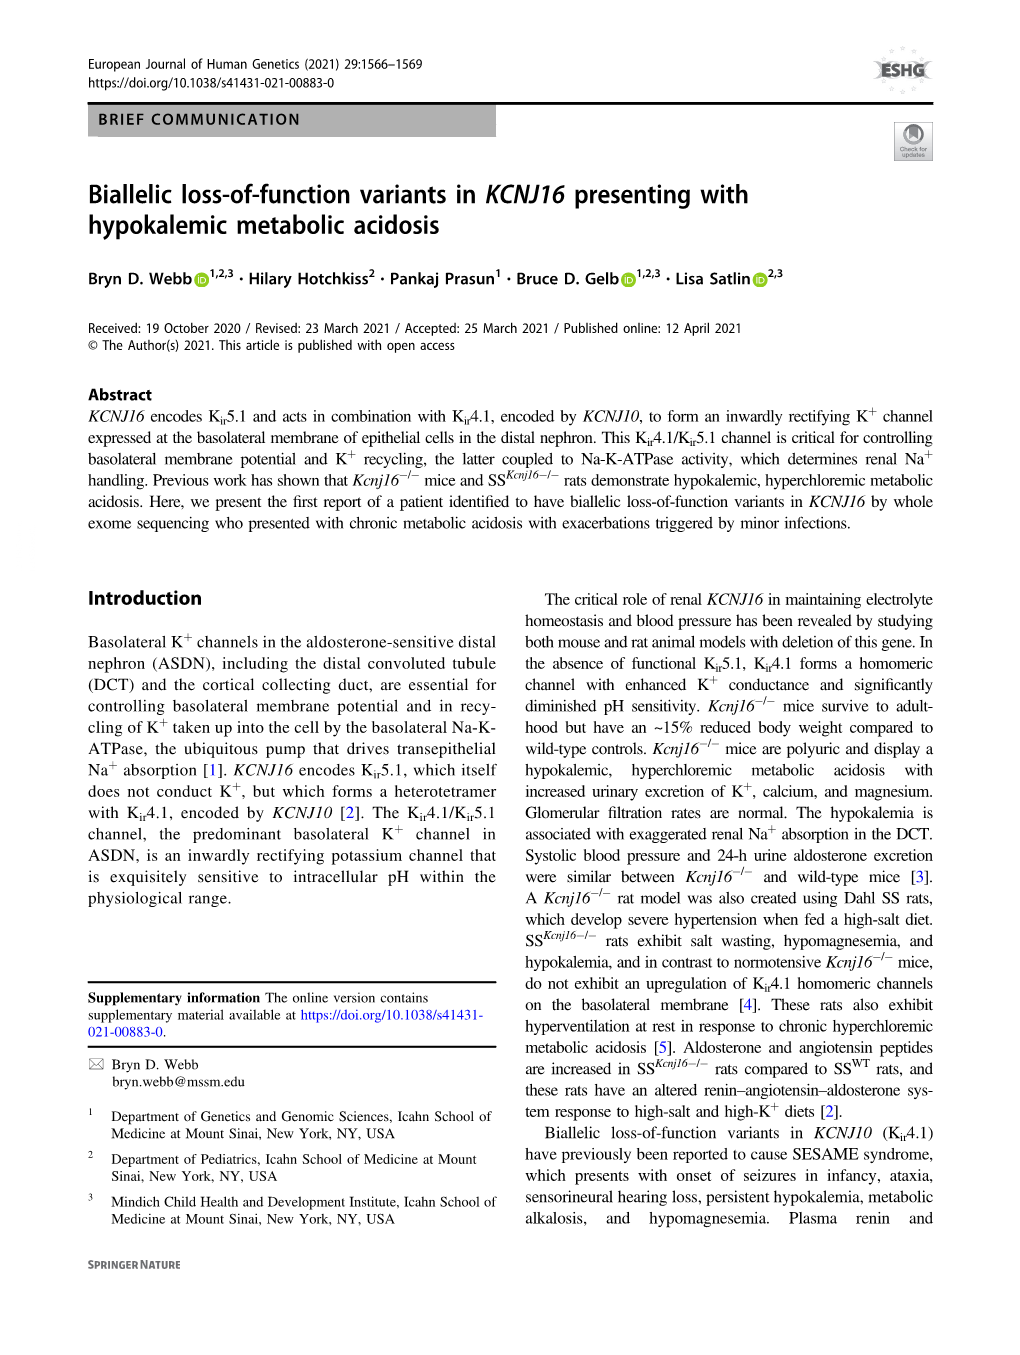 Biallelic Loss-Of-Function Variants in KCNJ16 Presenting with Hypokalemic Metabolic Acidosis